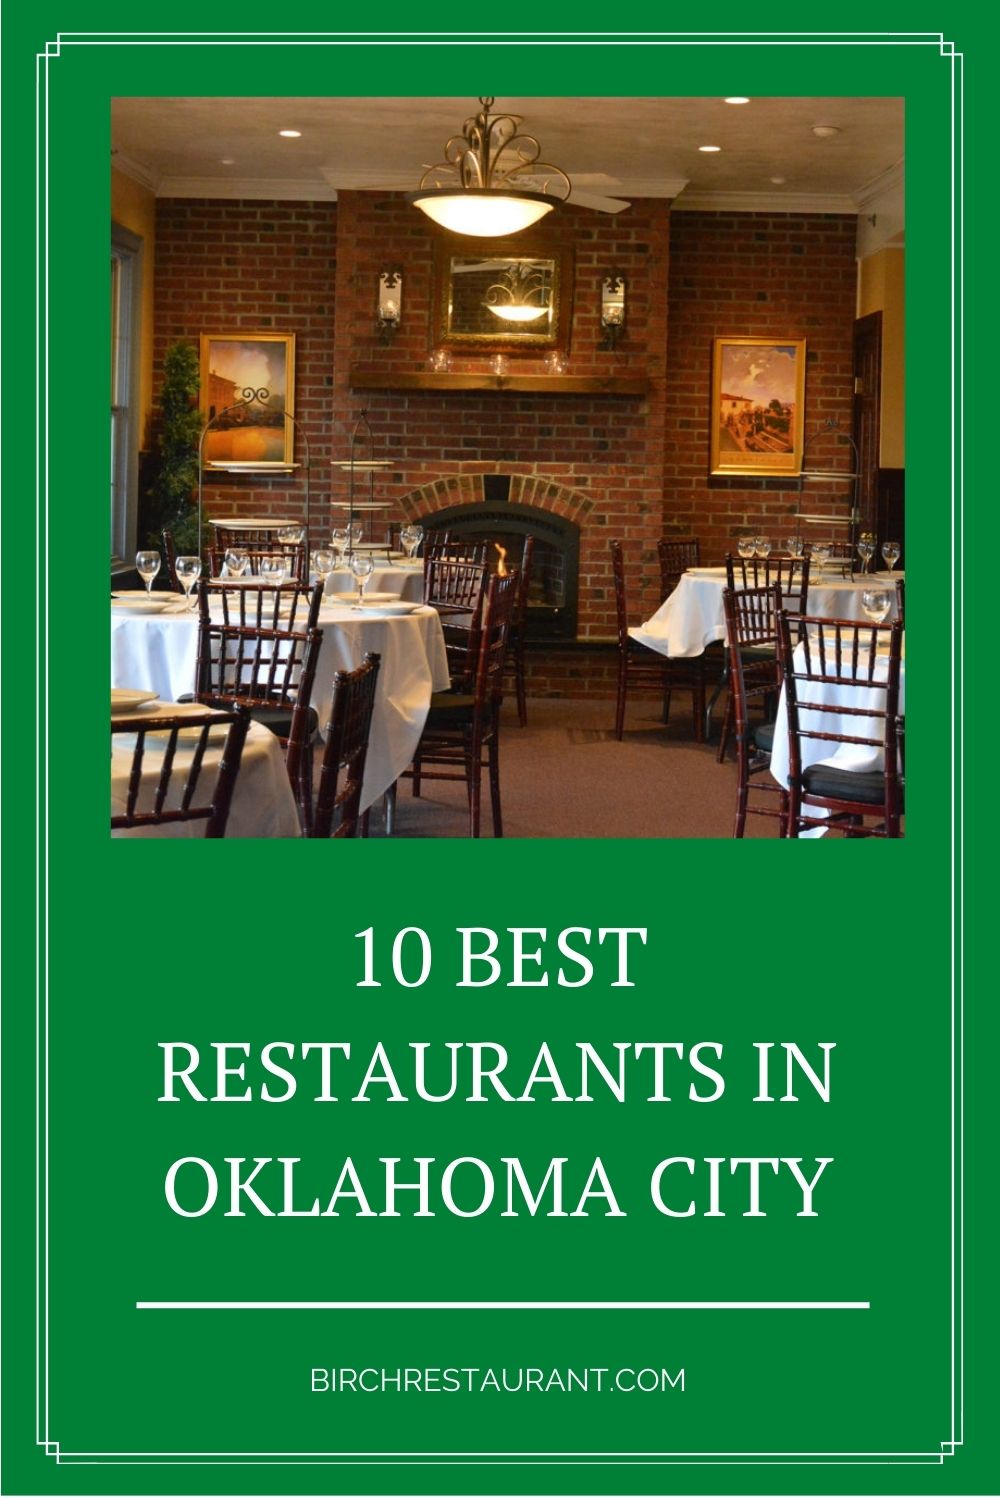 Best Restaurants in Oklahoma City